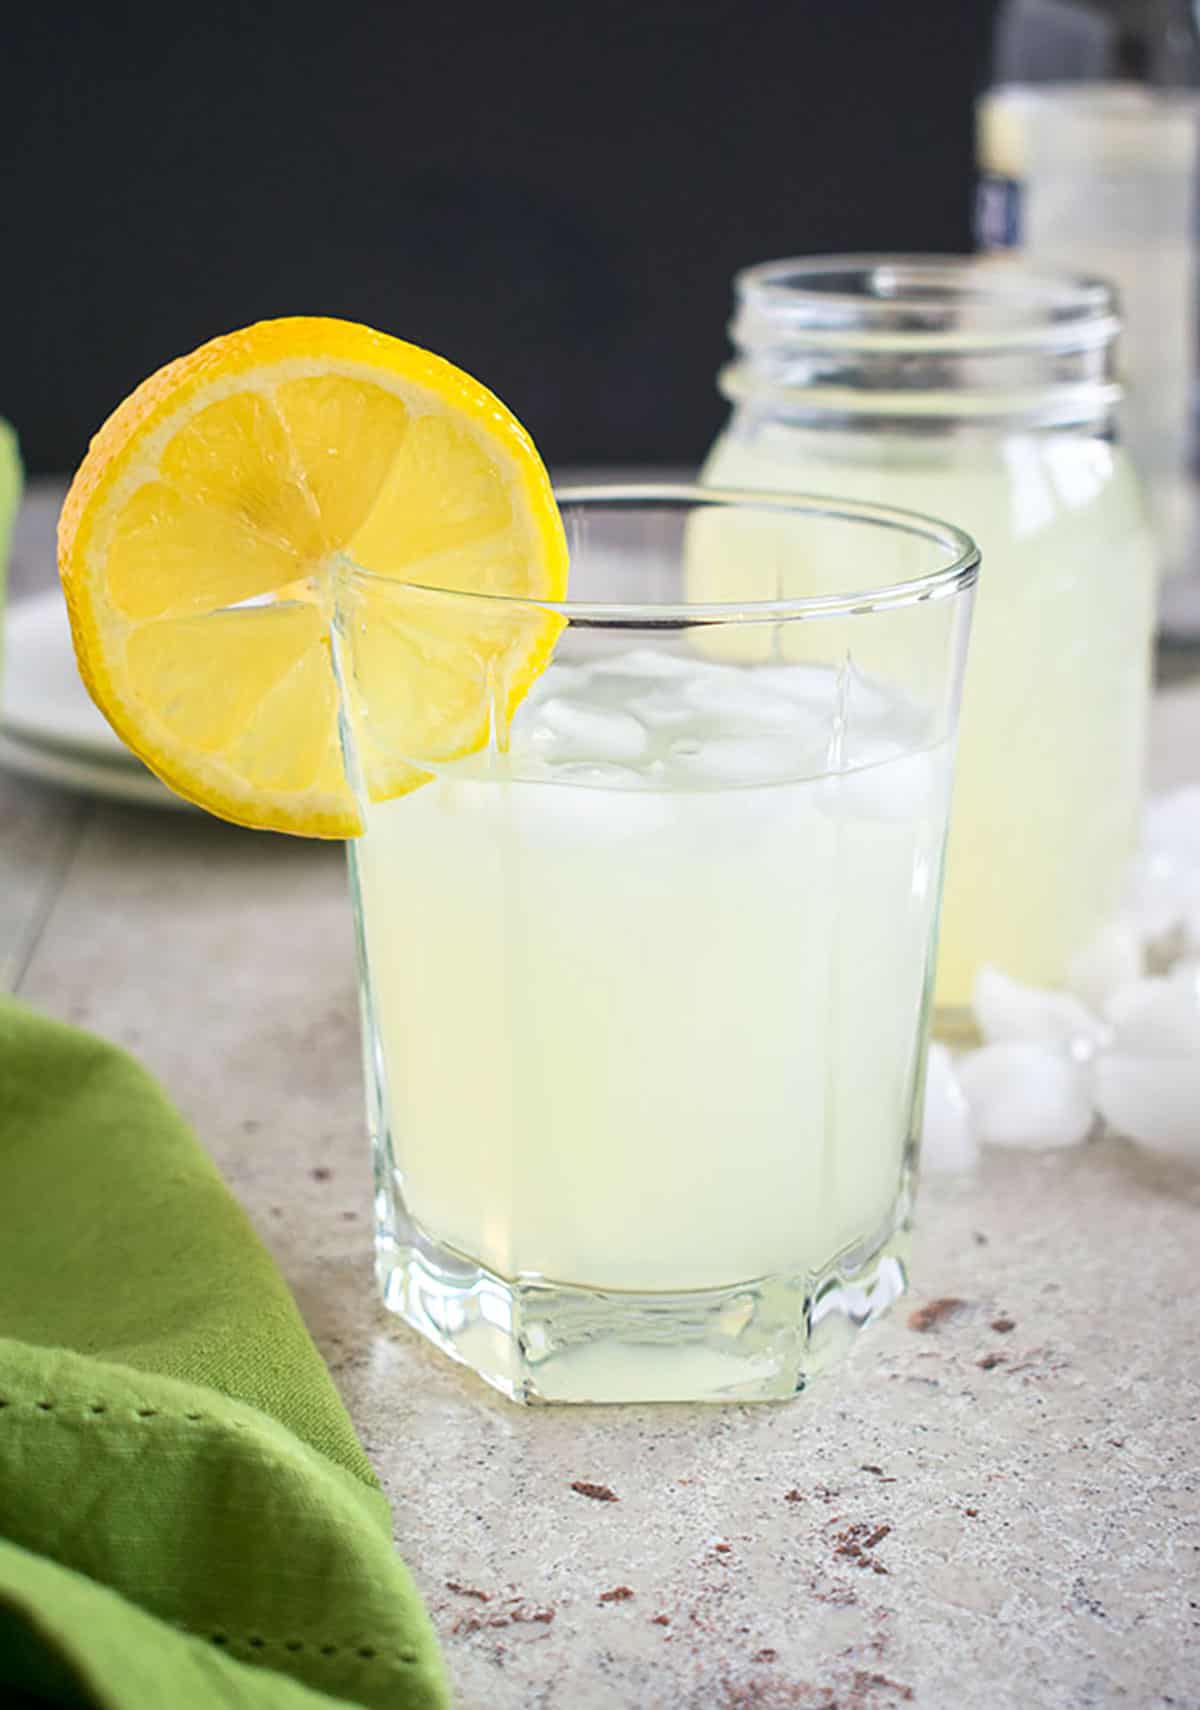 glass of lemonade moonshine with a lemon garnish in front of a jar of lemonade moonshine